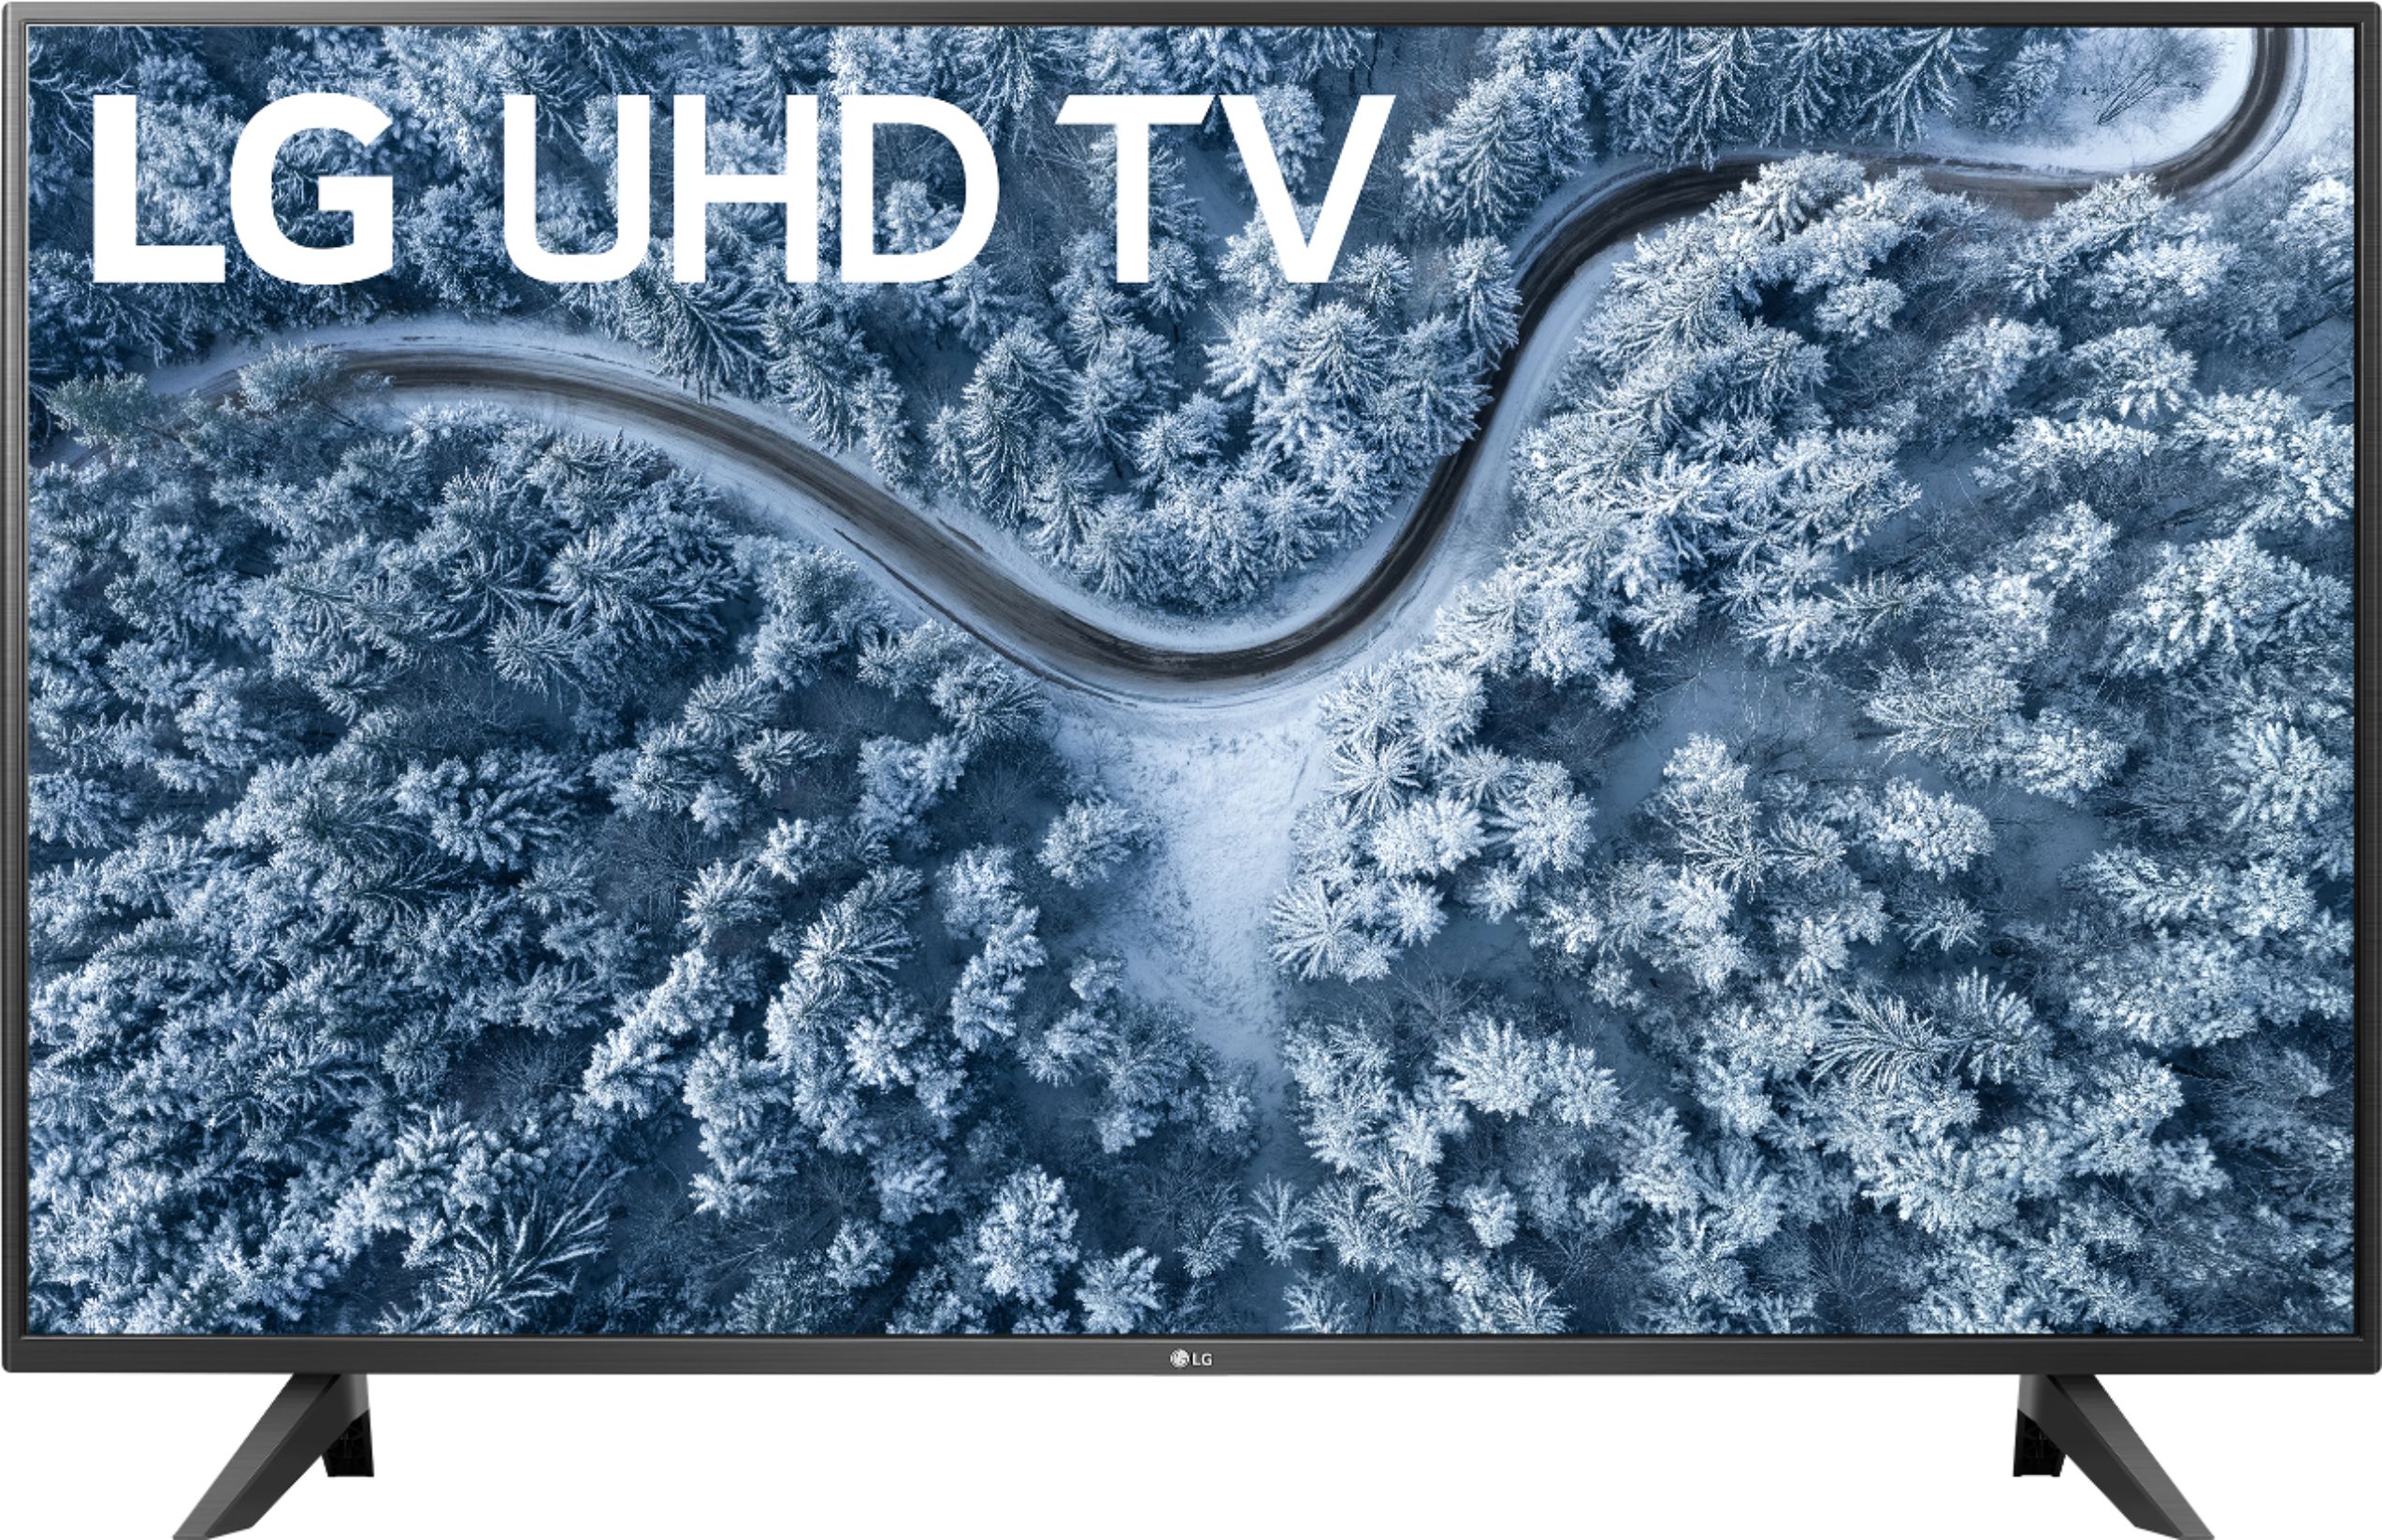 LG 43UP7000PUA 43" Class UP7000 Series LED 4K UHD Smart webOS TV